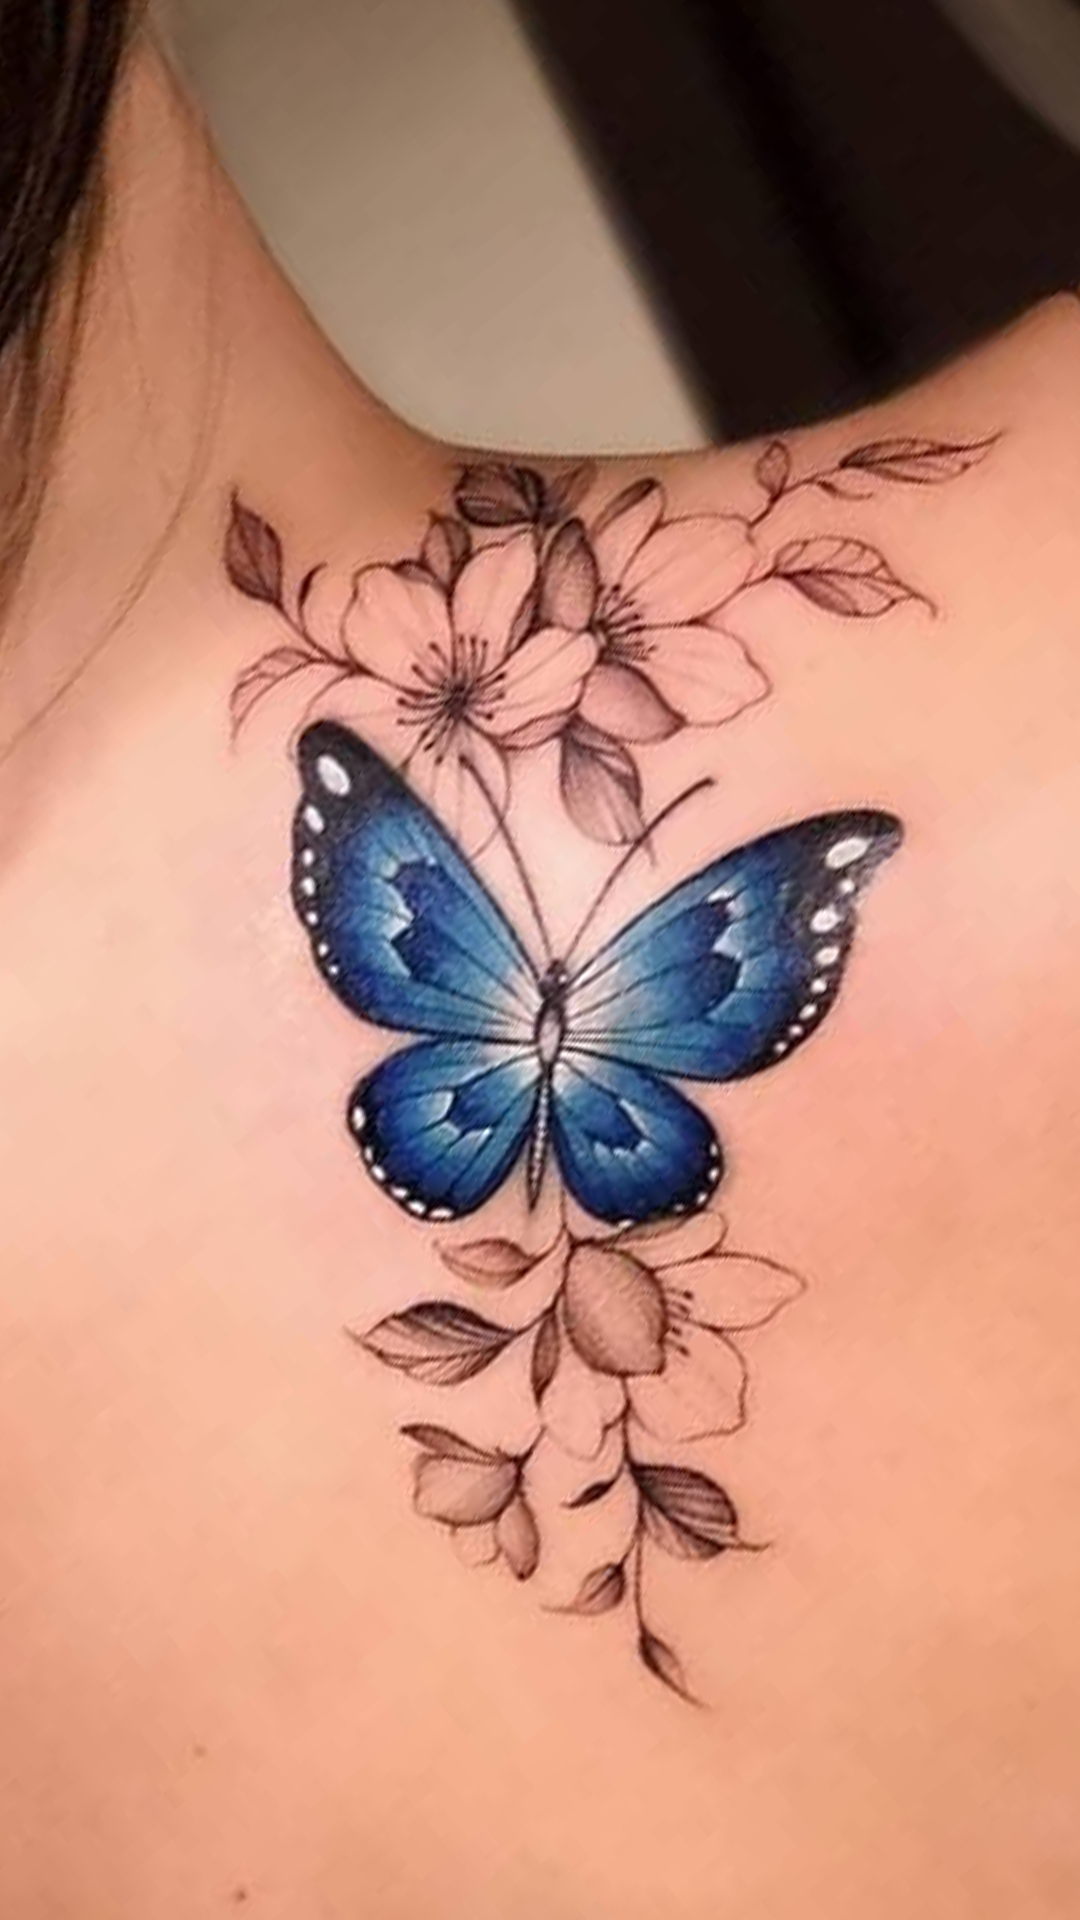 tatuagem-de-borboleta-no-ombro-5 